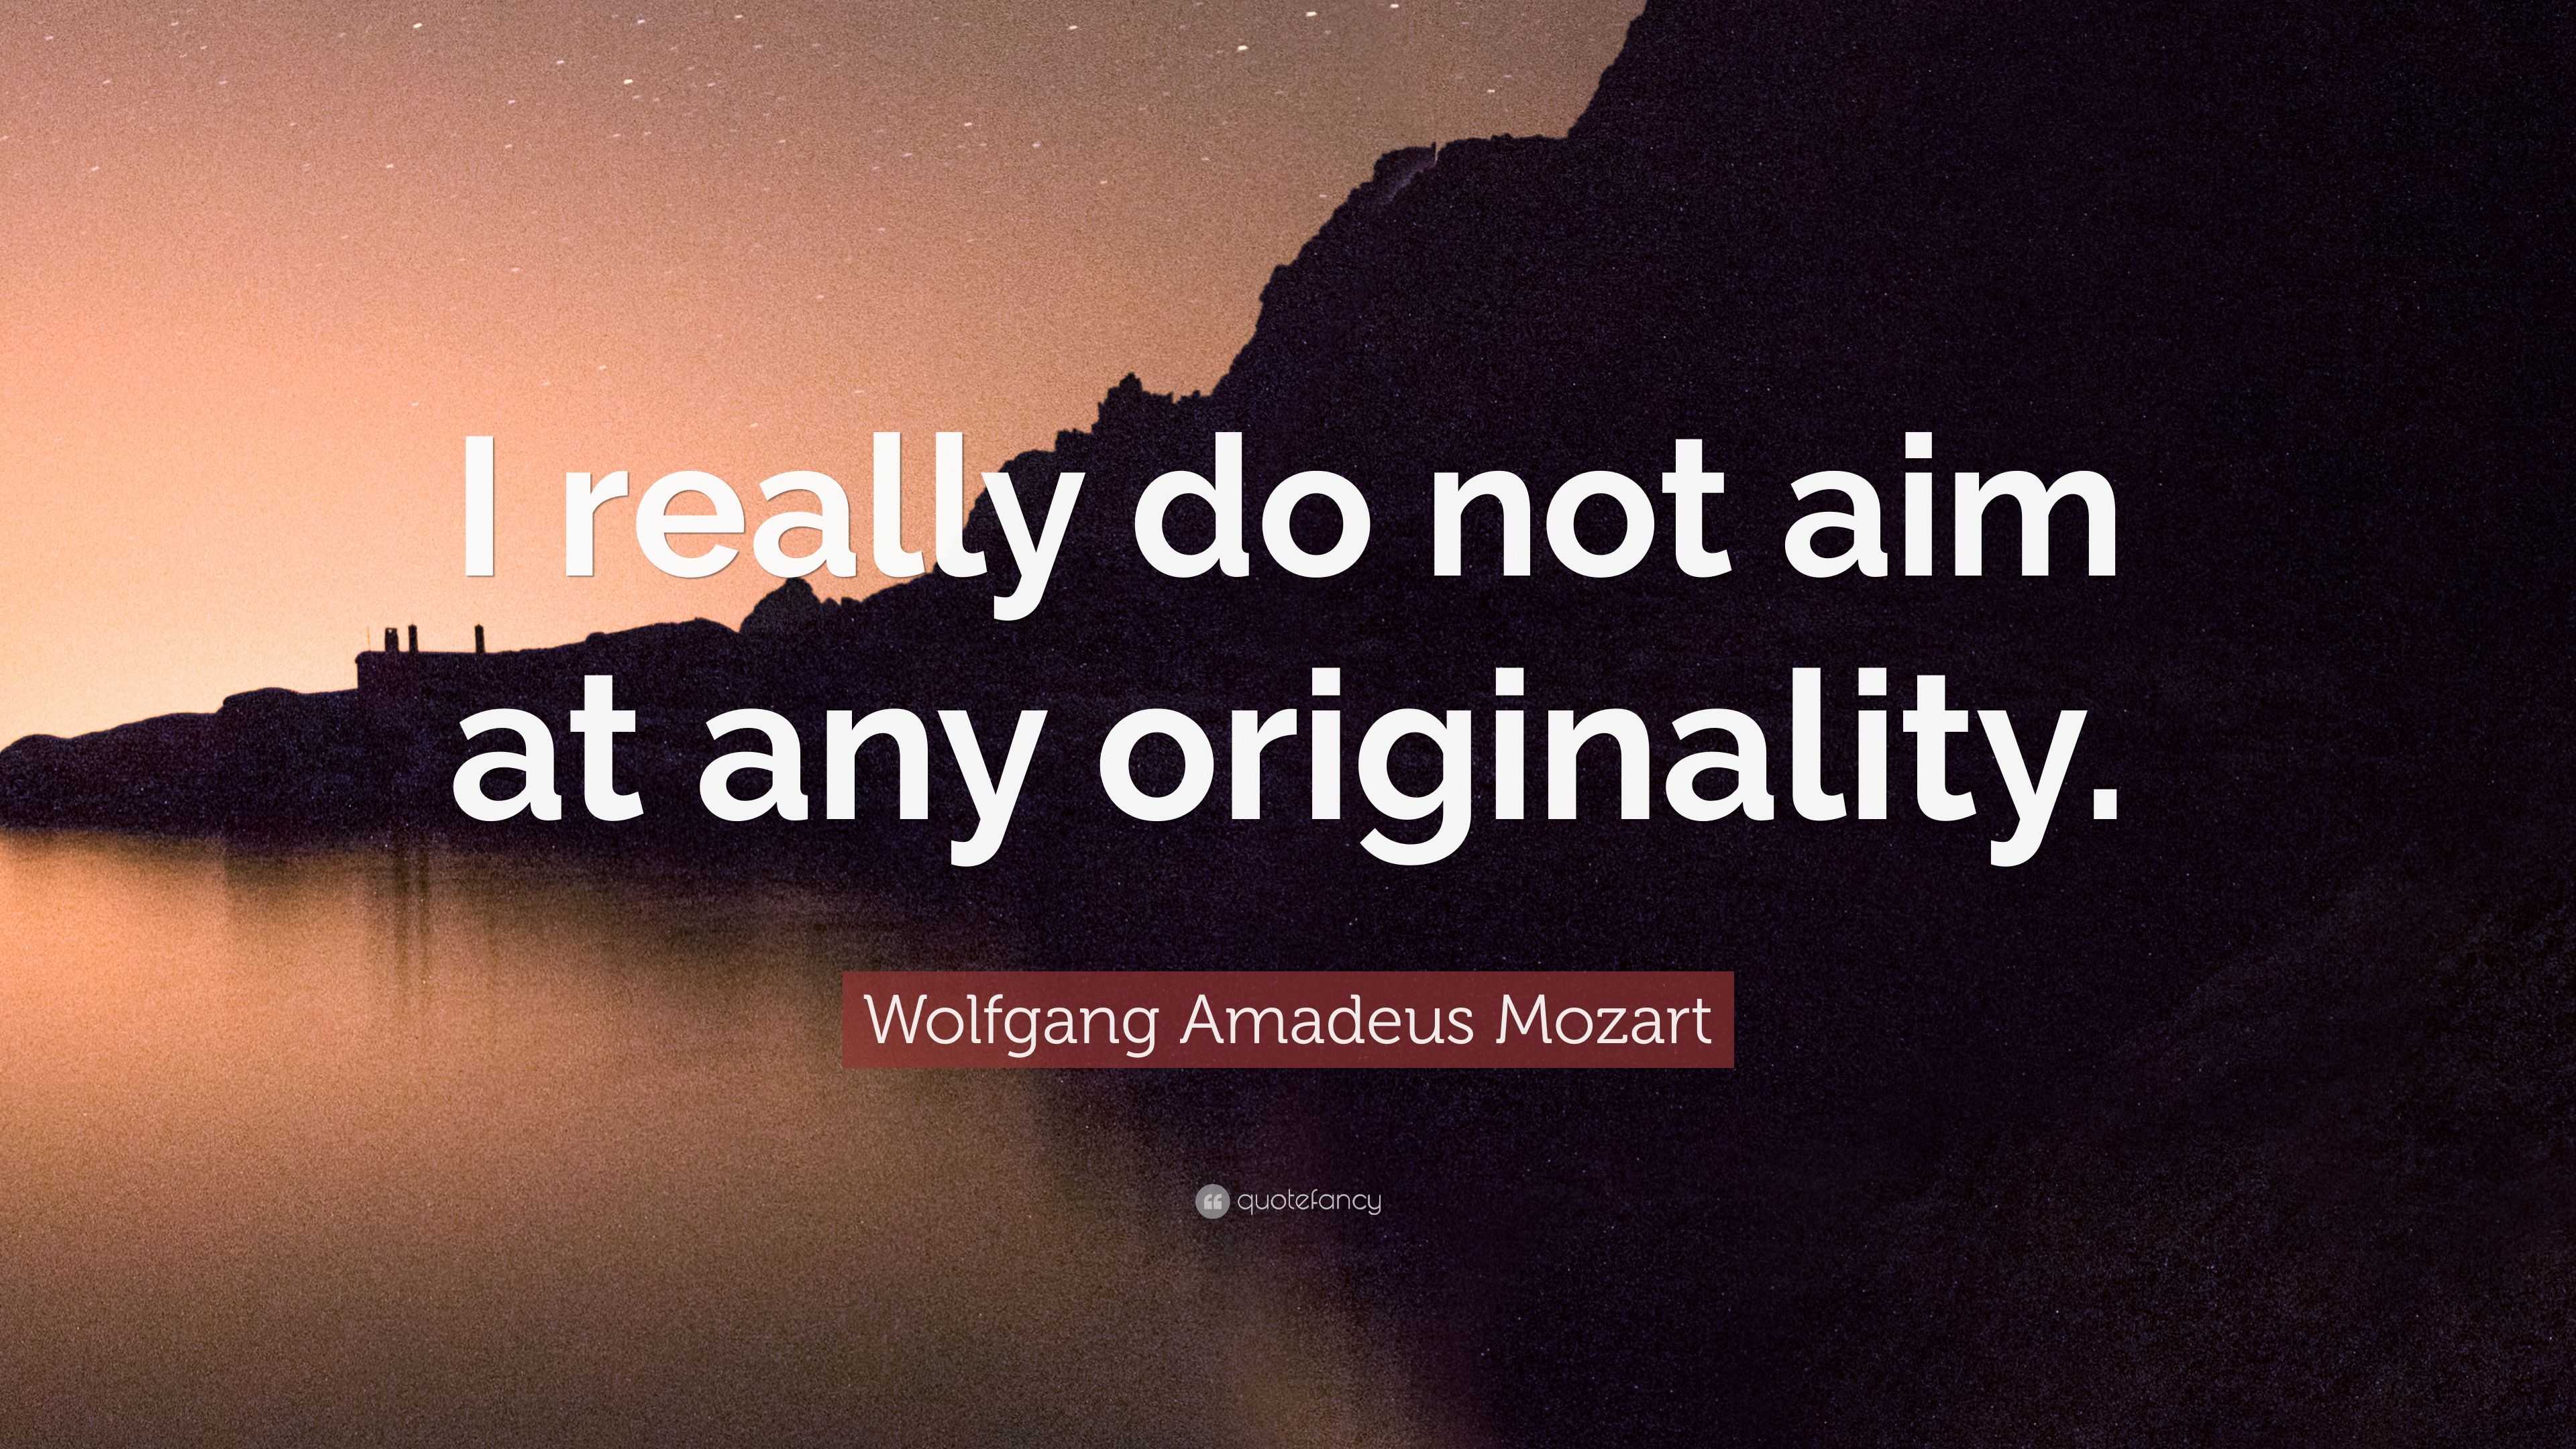 Wolfgang Amadeus Mozart Quote: “I really do not aim at any originality.”